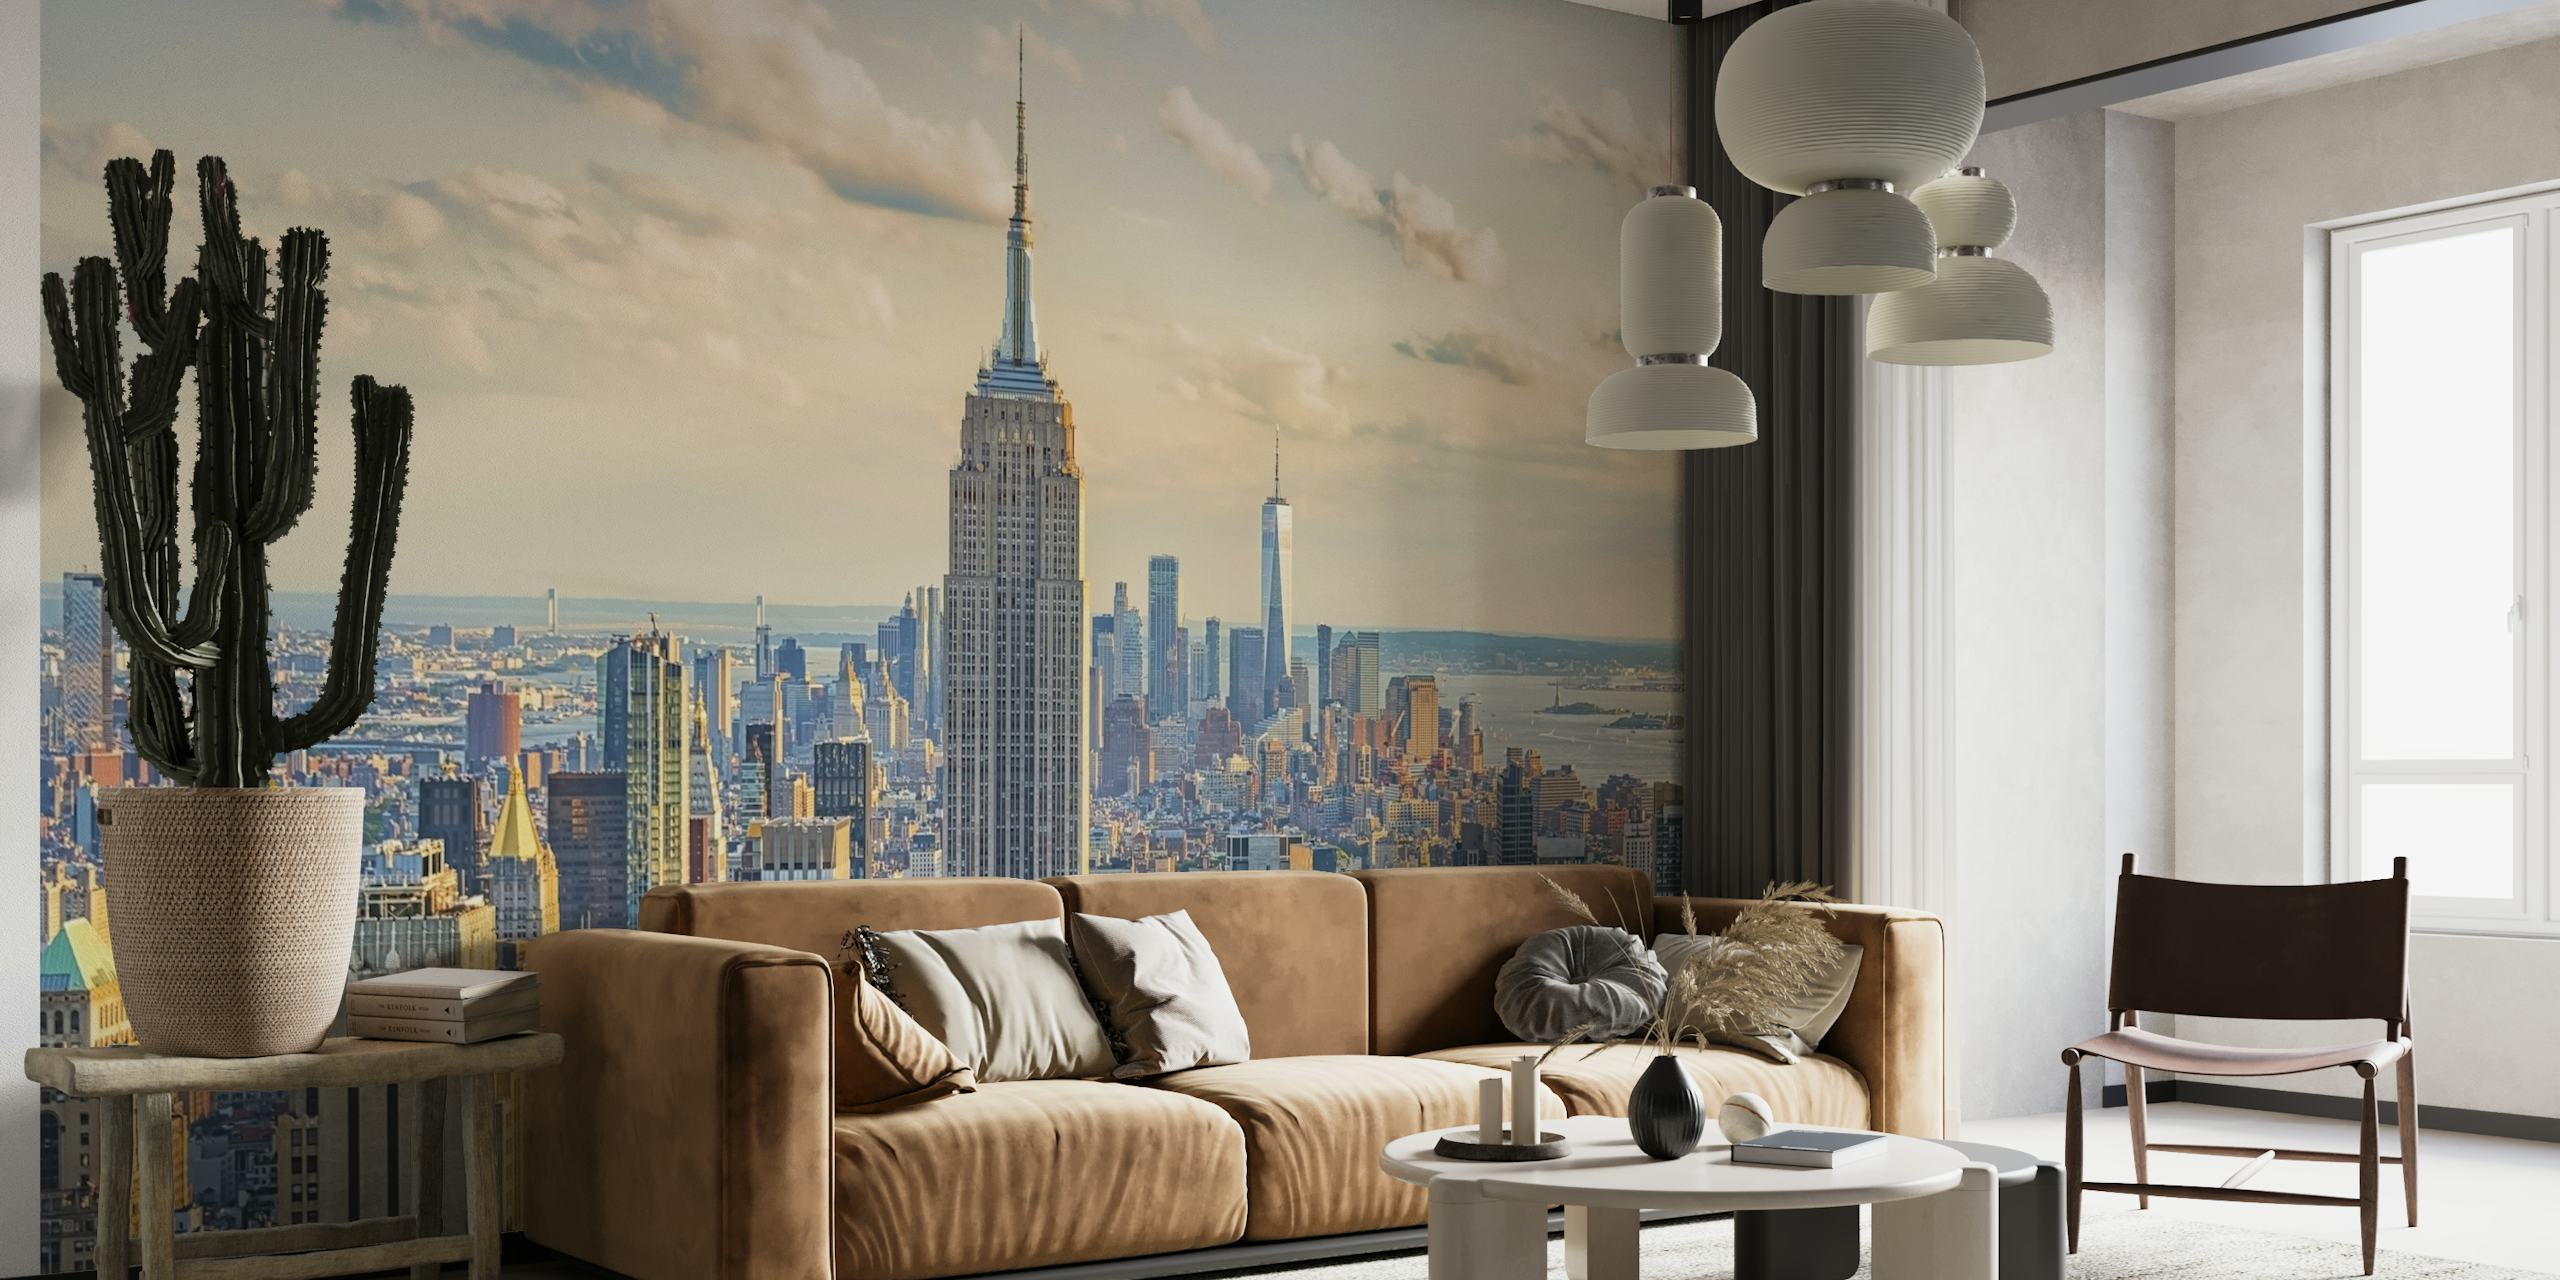 Fototapeta Empire State Building s panoramatem New Yorku